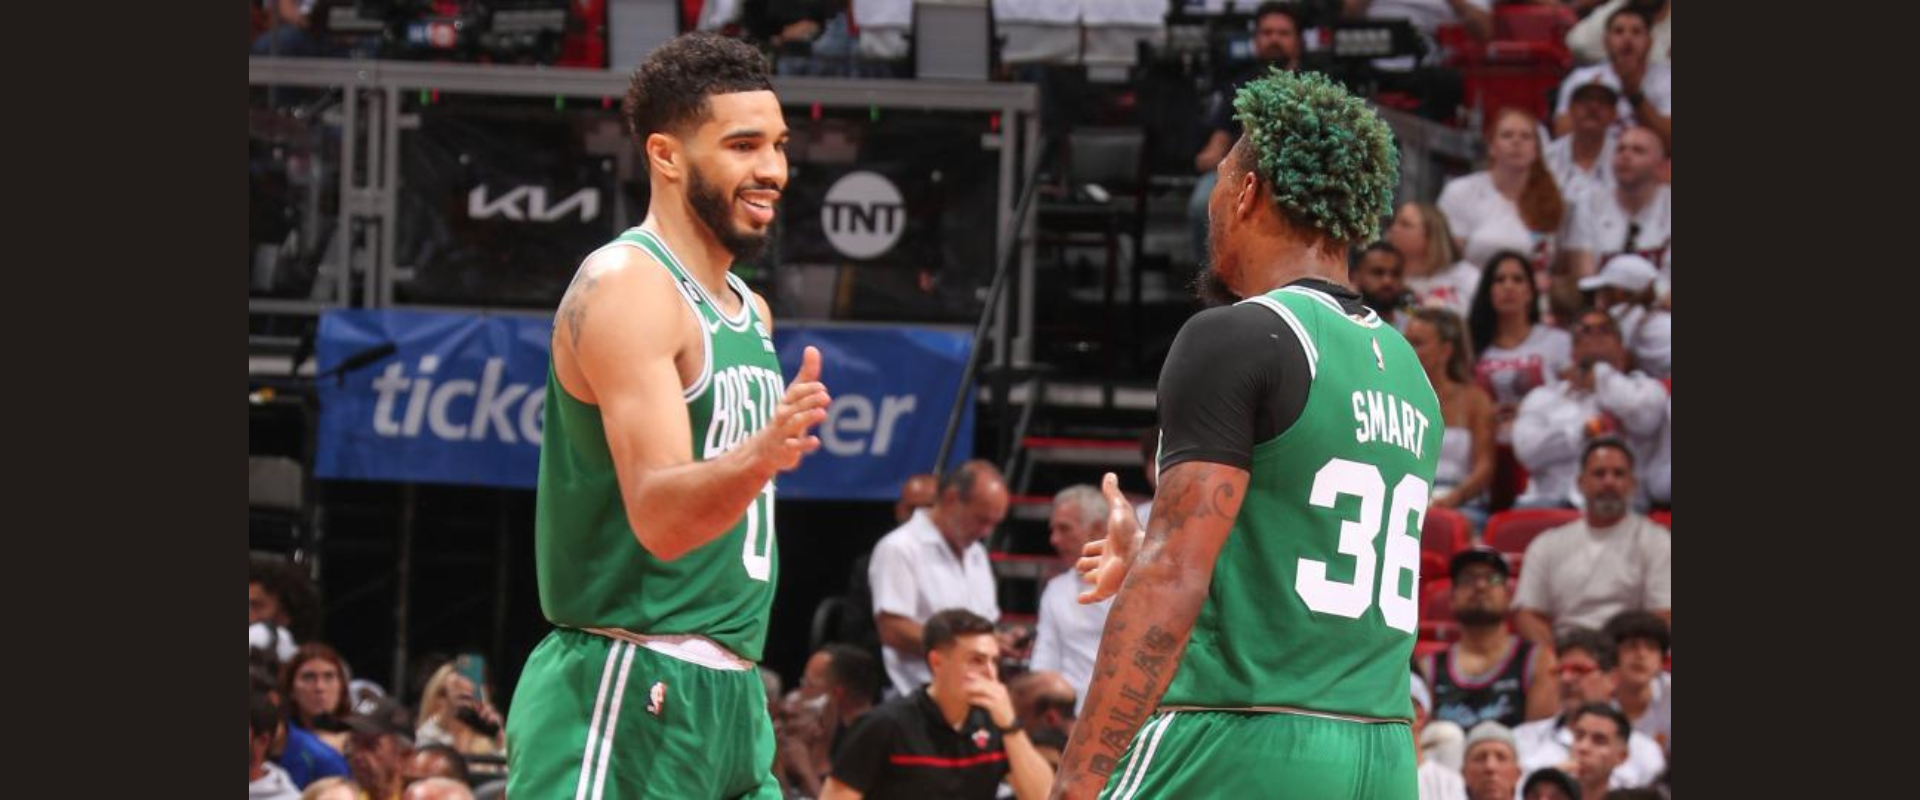 Celtics vs. Heat